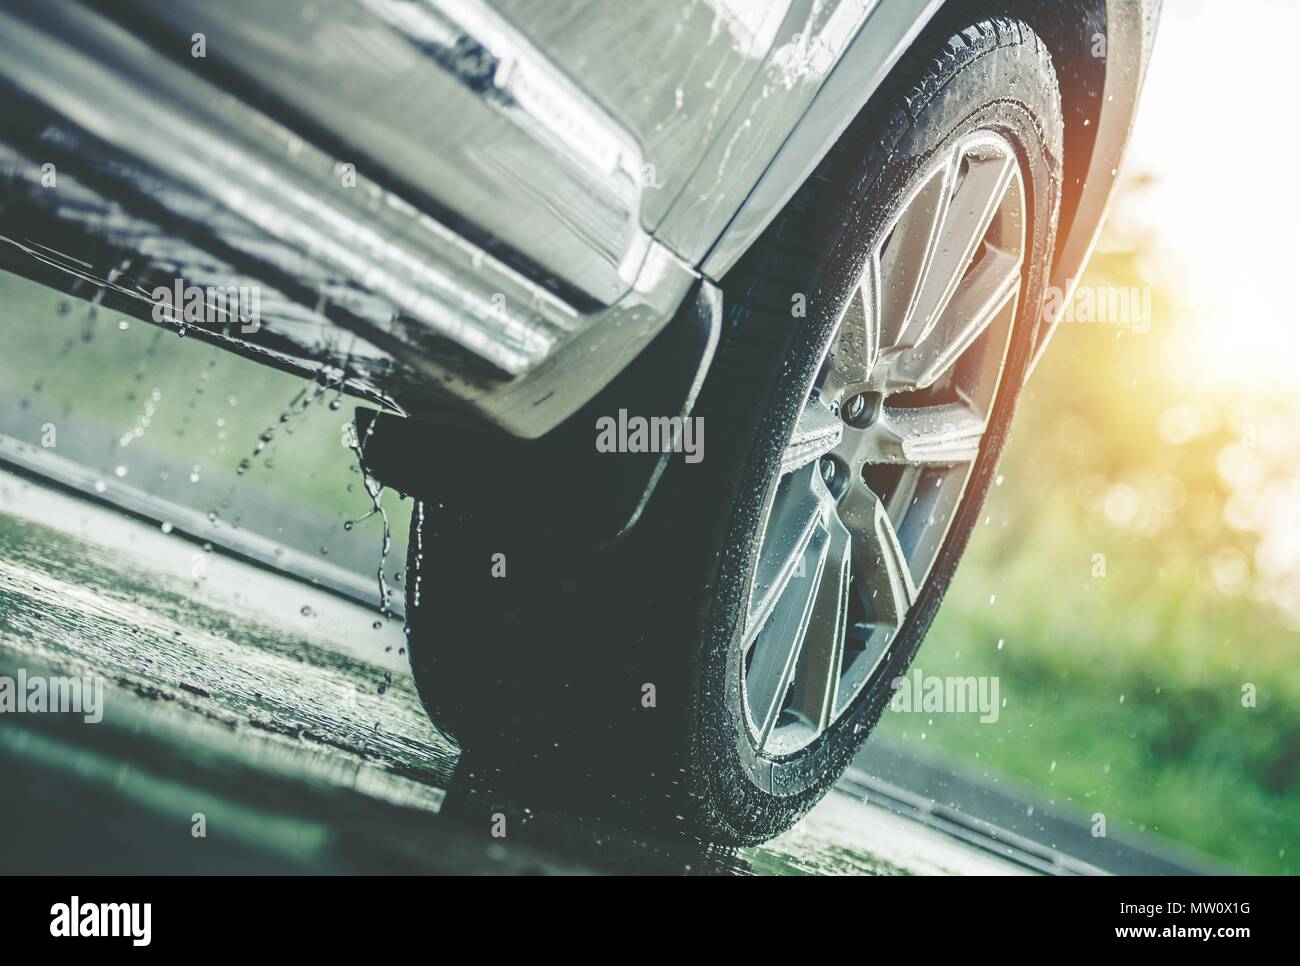 Car Driving in the Rain. Modern Rain Summer Season Tires on the Wet Pavement. Closeup Aquaplaning Photo. Stock Photo